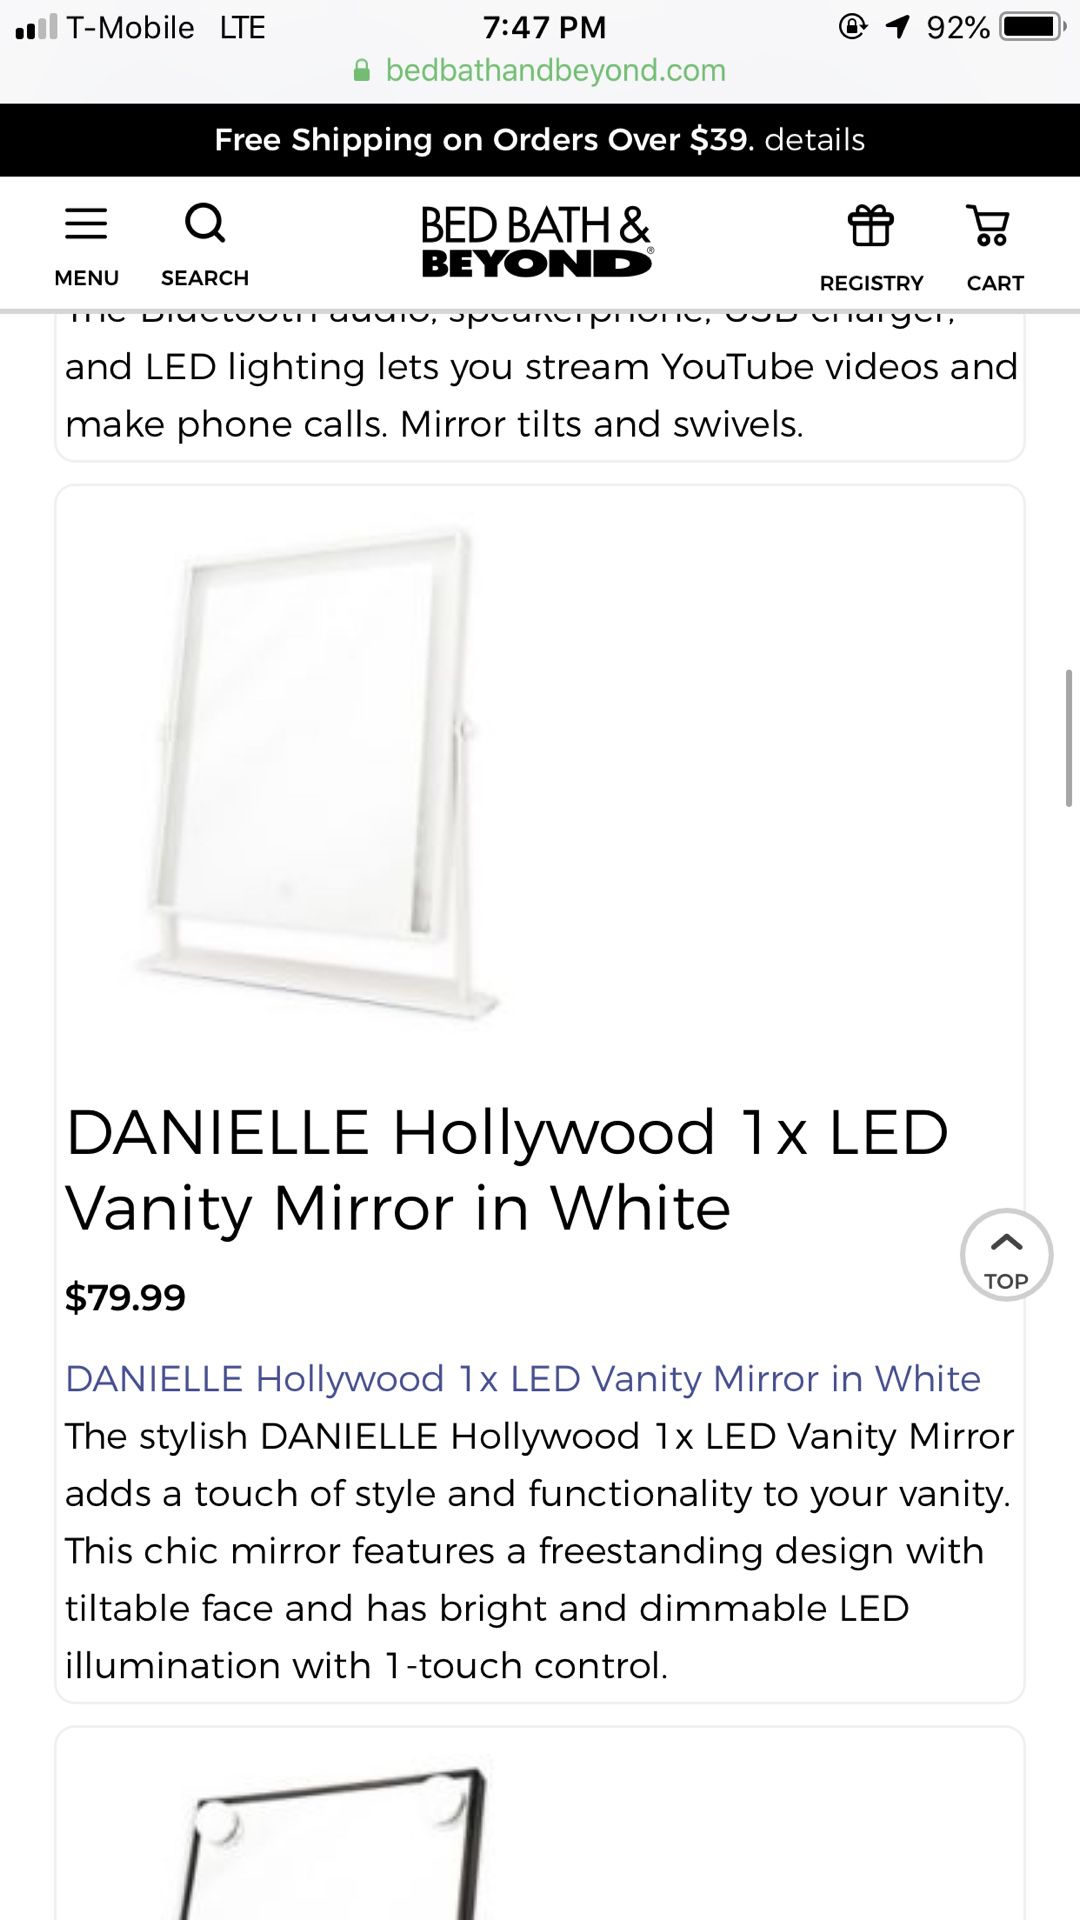 Brand new Led Vanity mirror Danielle Hollywood